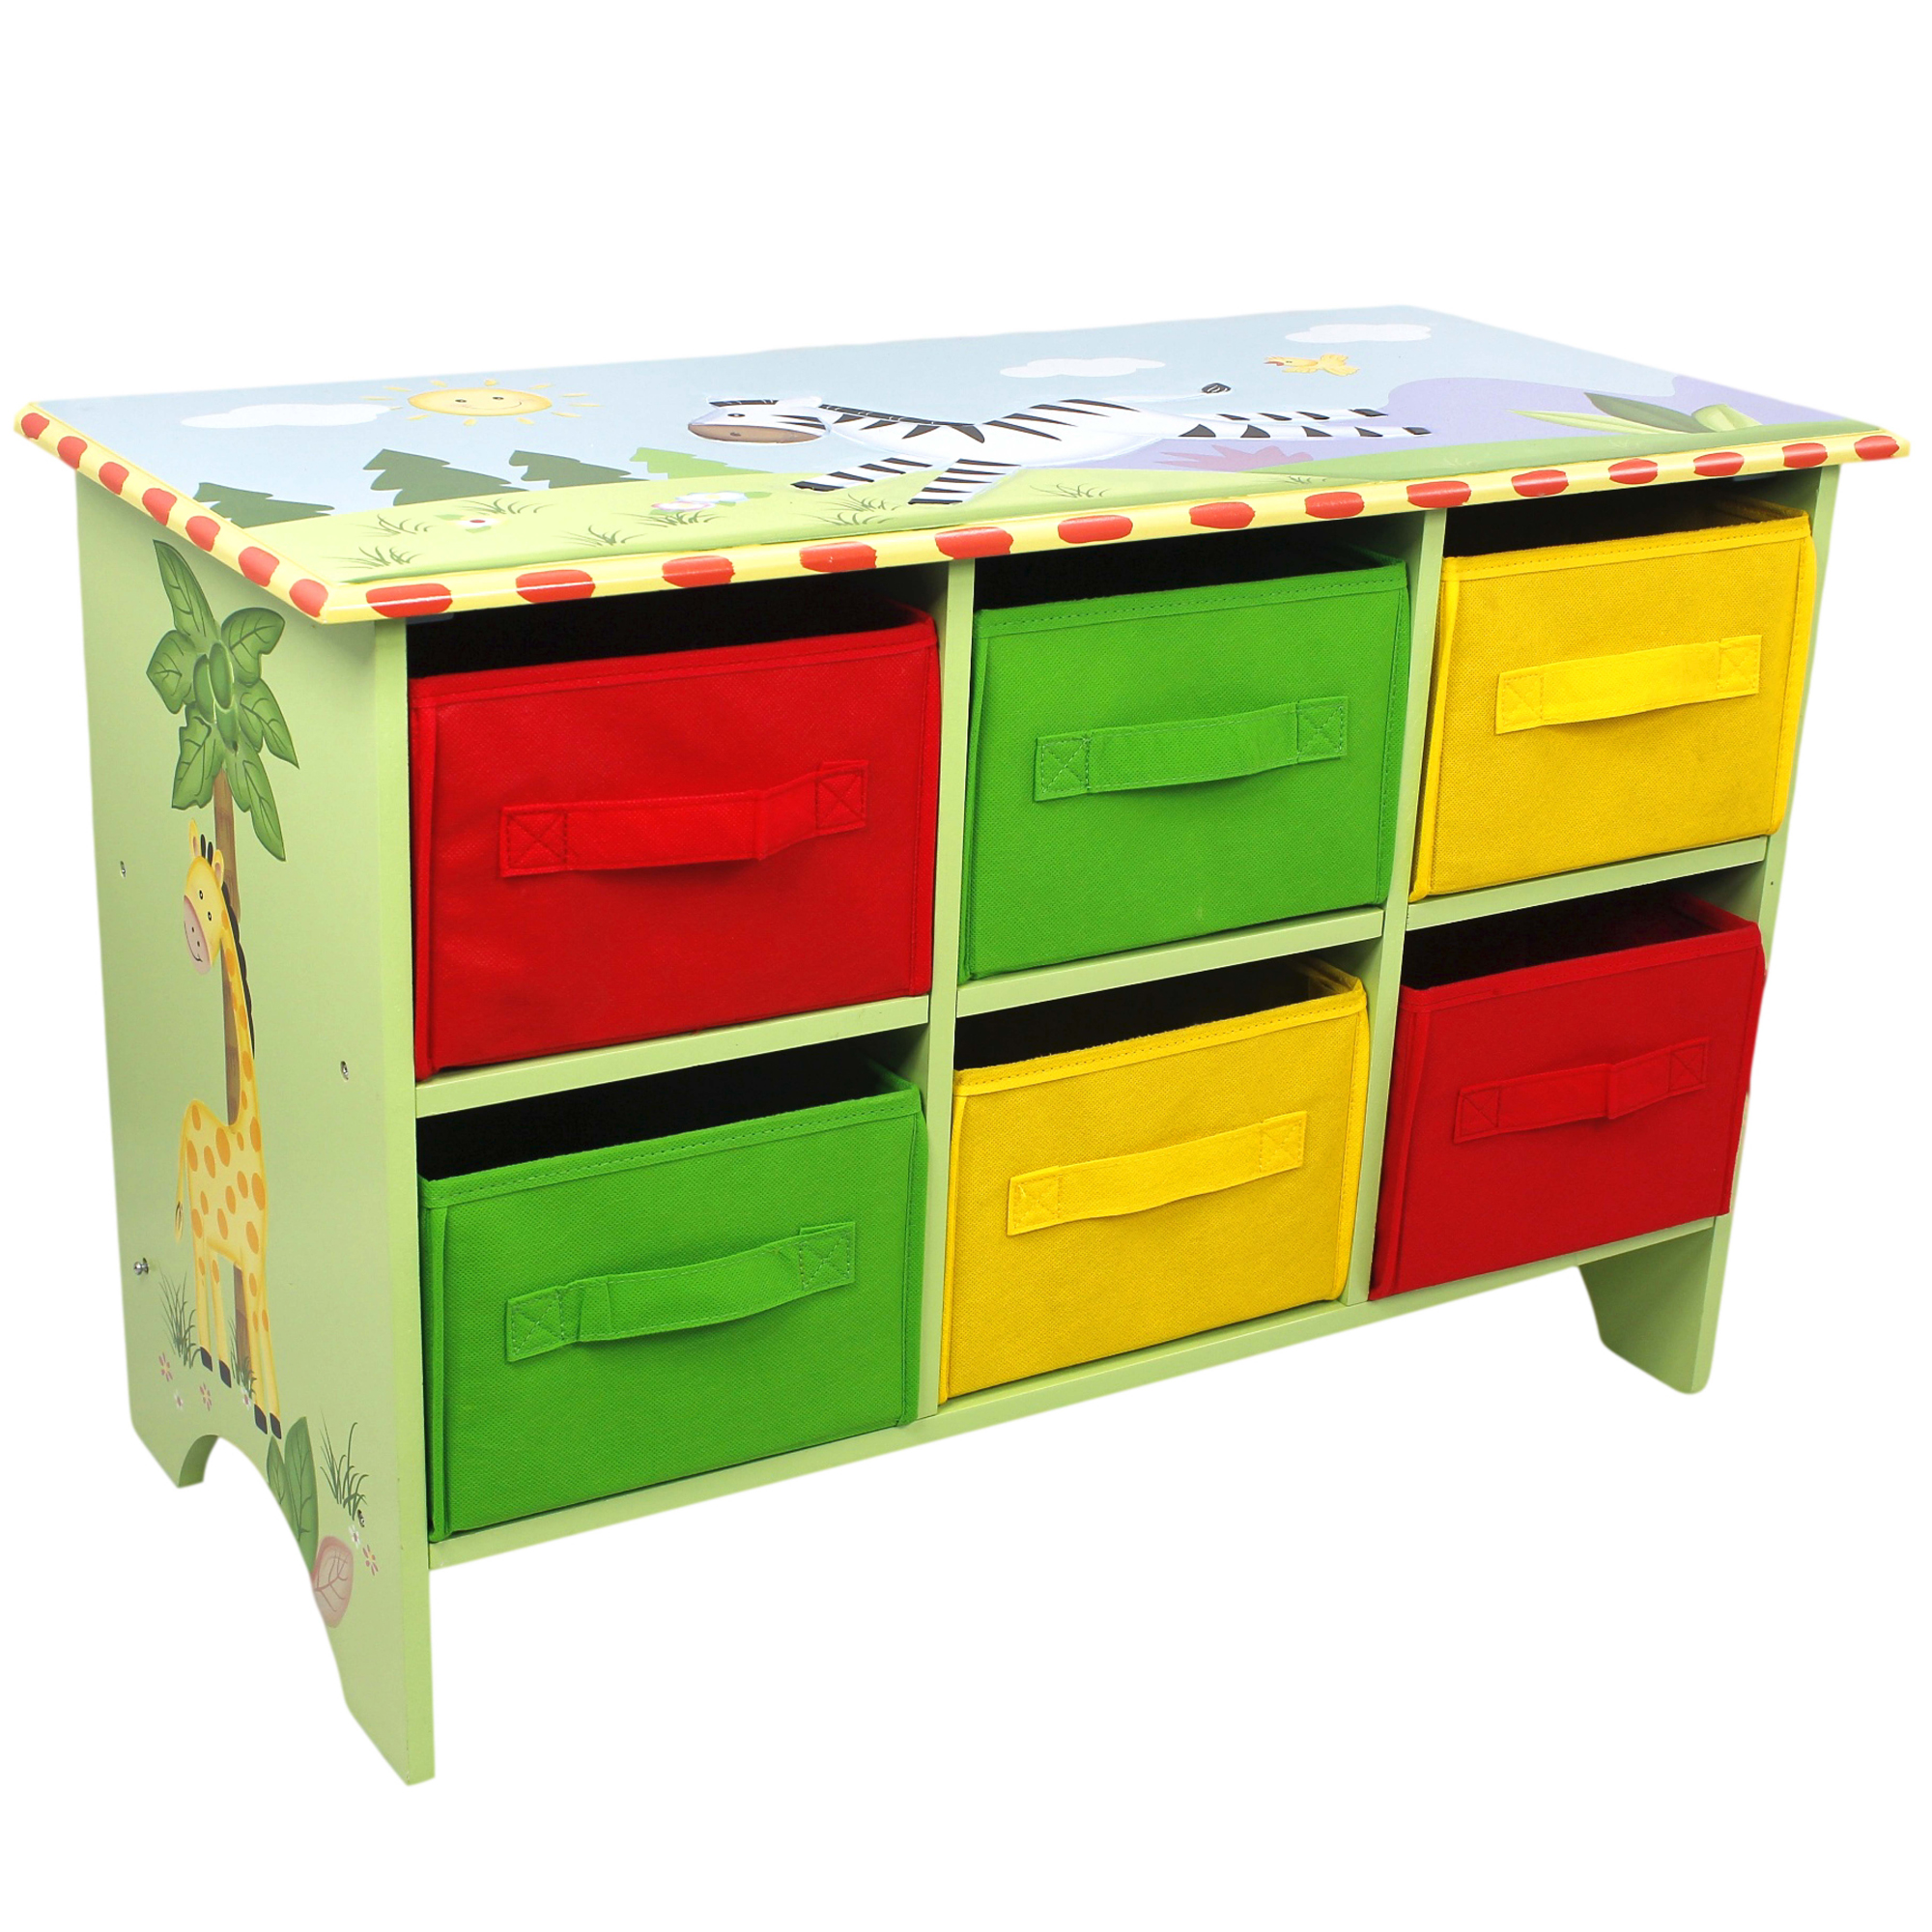 Fantasy Fields - Toy Furniture -Sunny Safari Storage Cubby Base Set TD-0032A - image 1 of 7